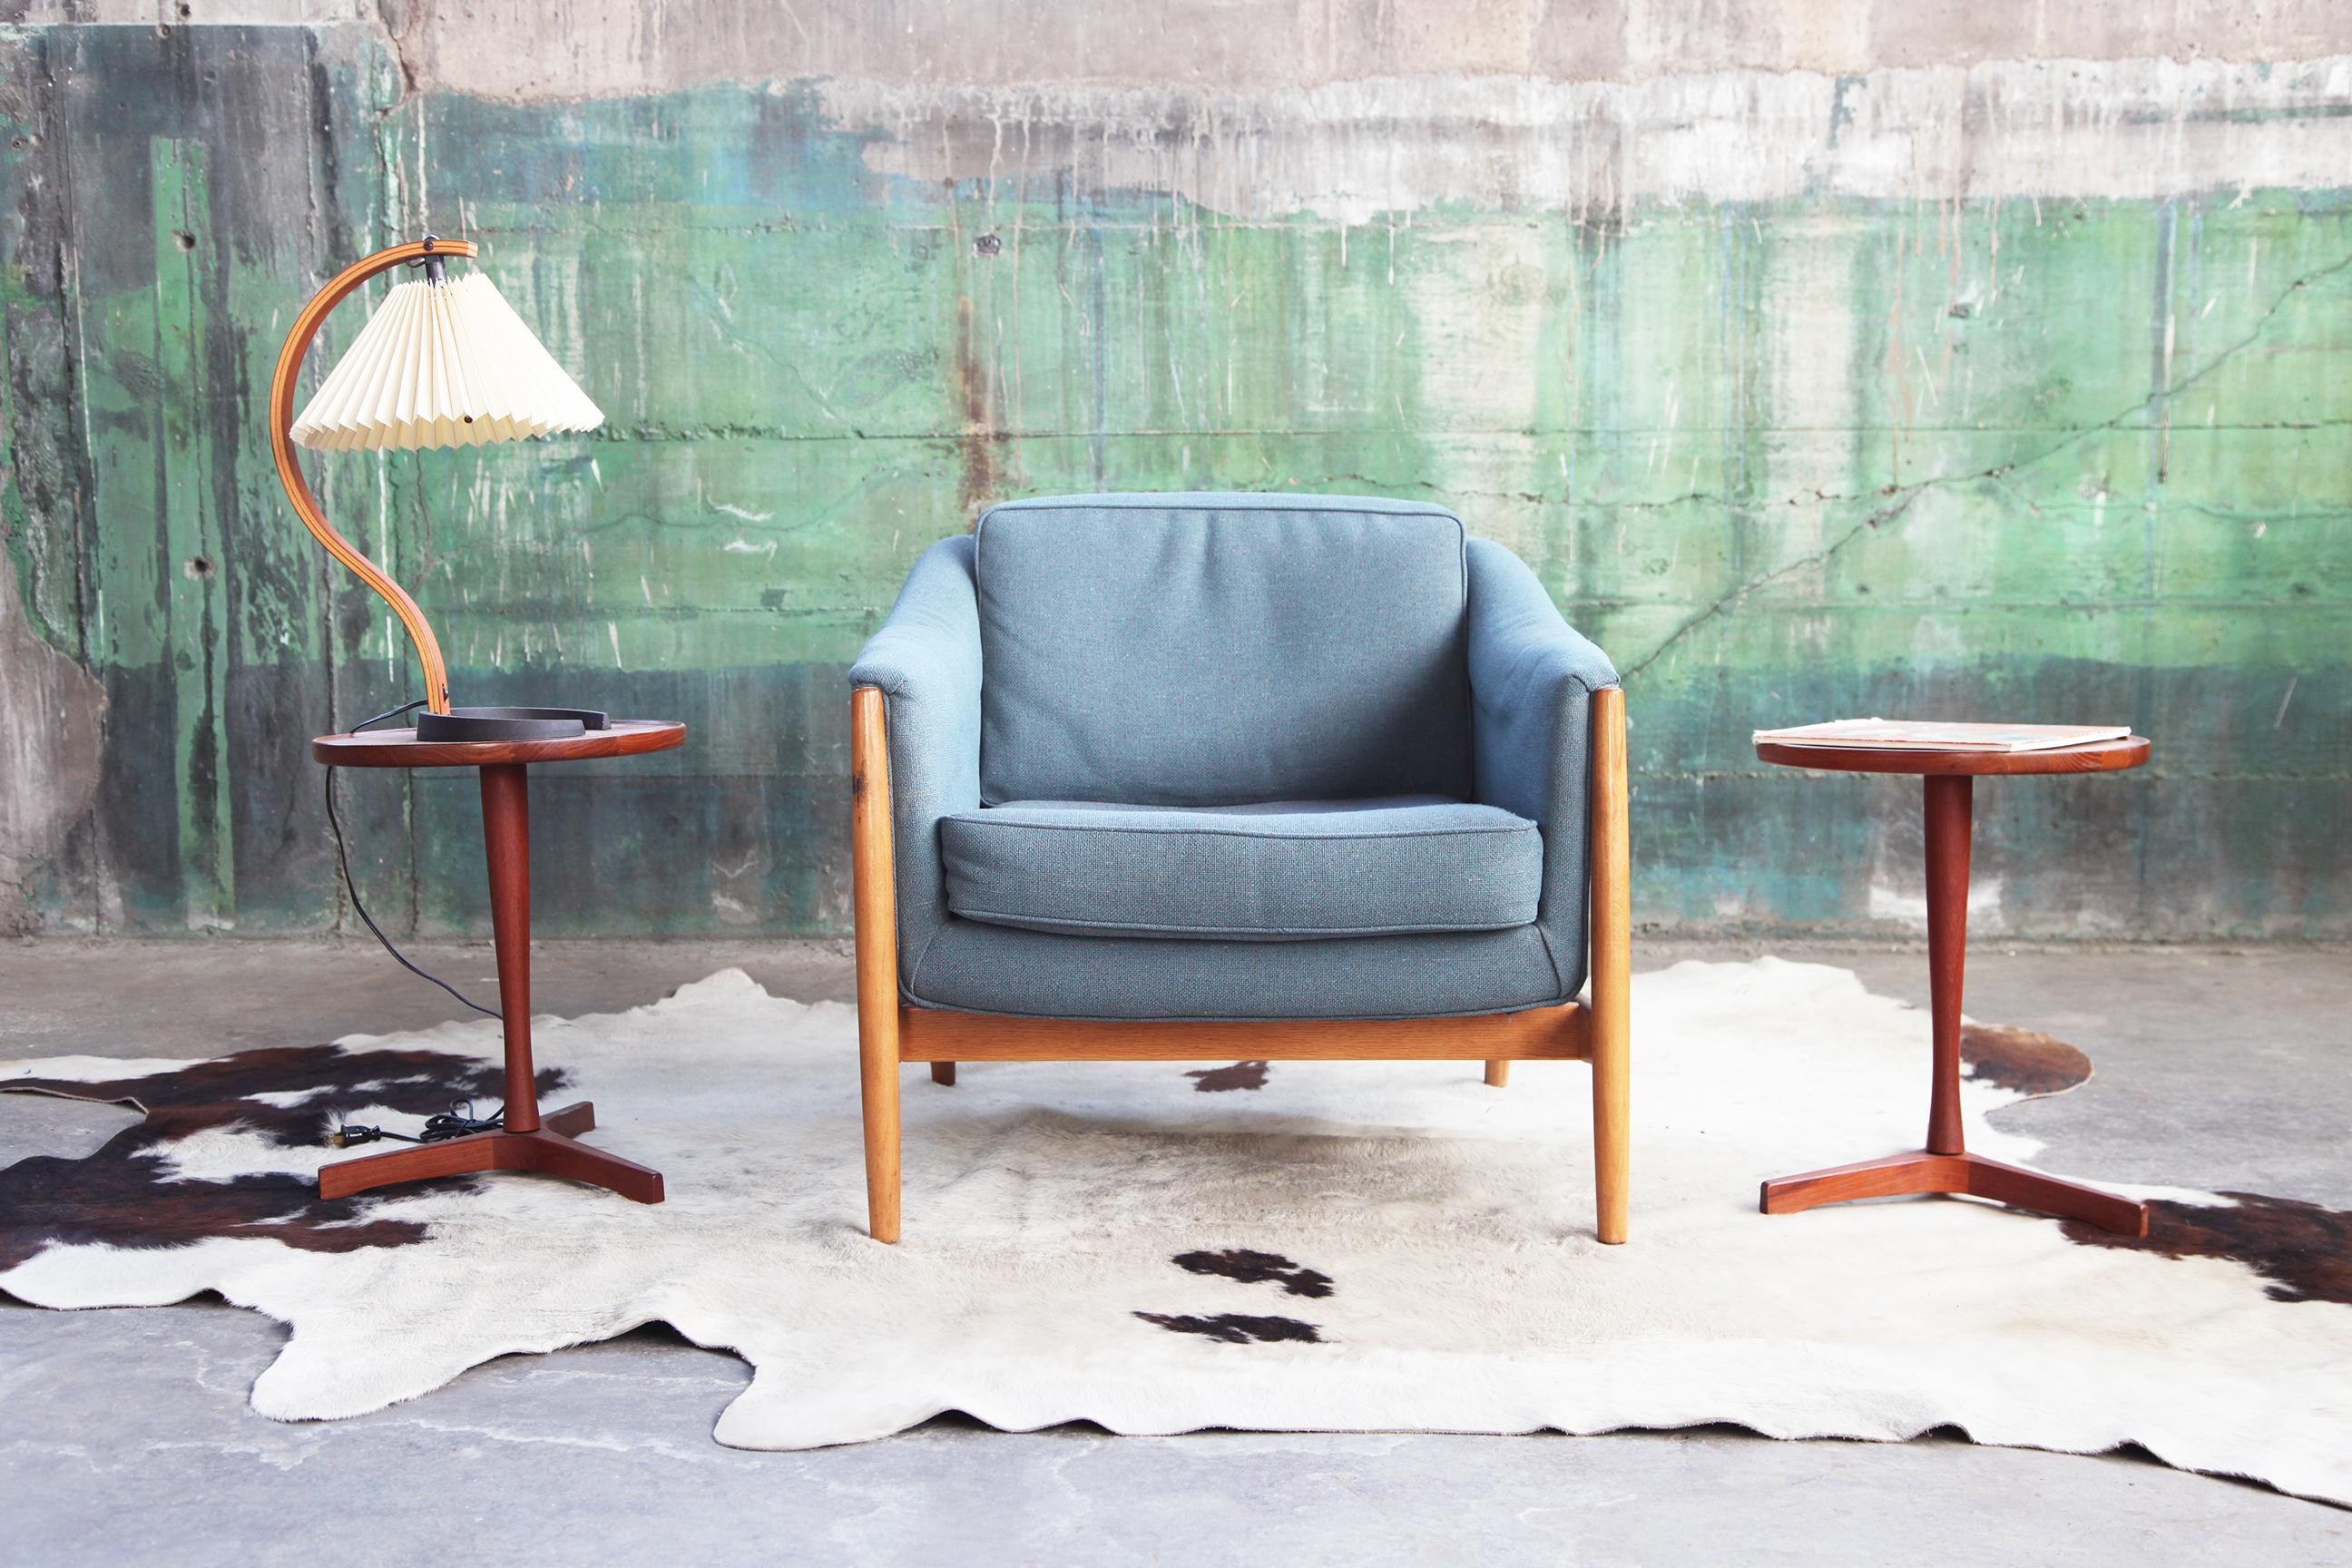 20th Century DUX Folke Ohlsson Midcentury Danish Modern Lounge Chair For Sale